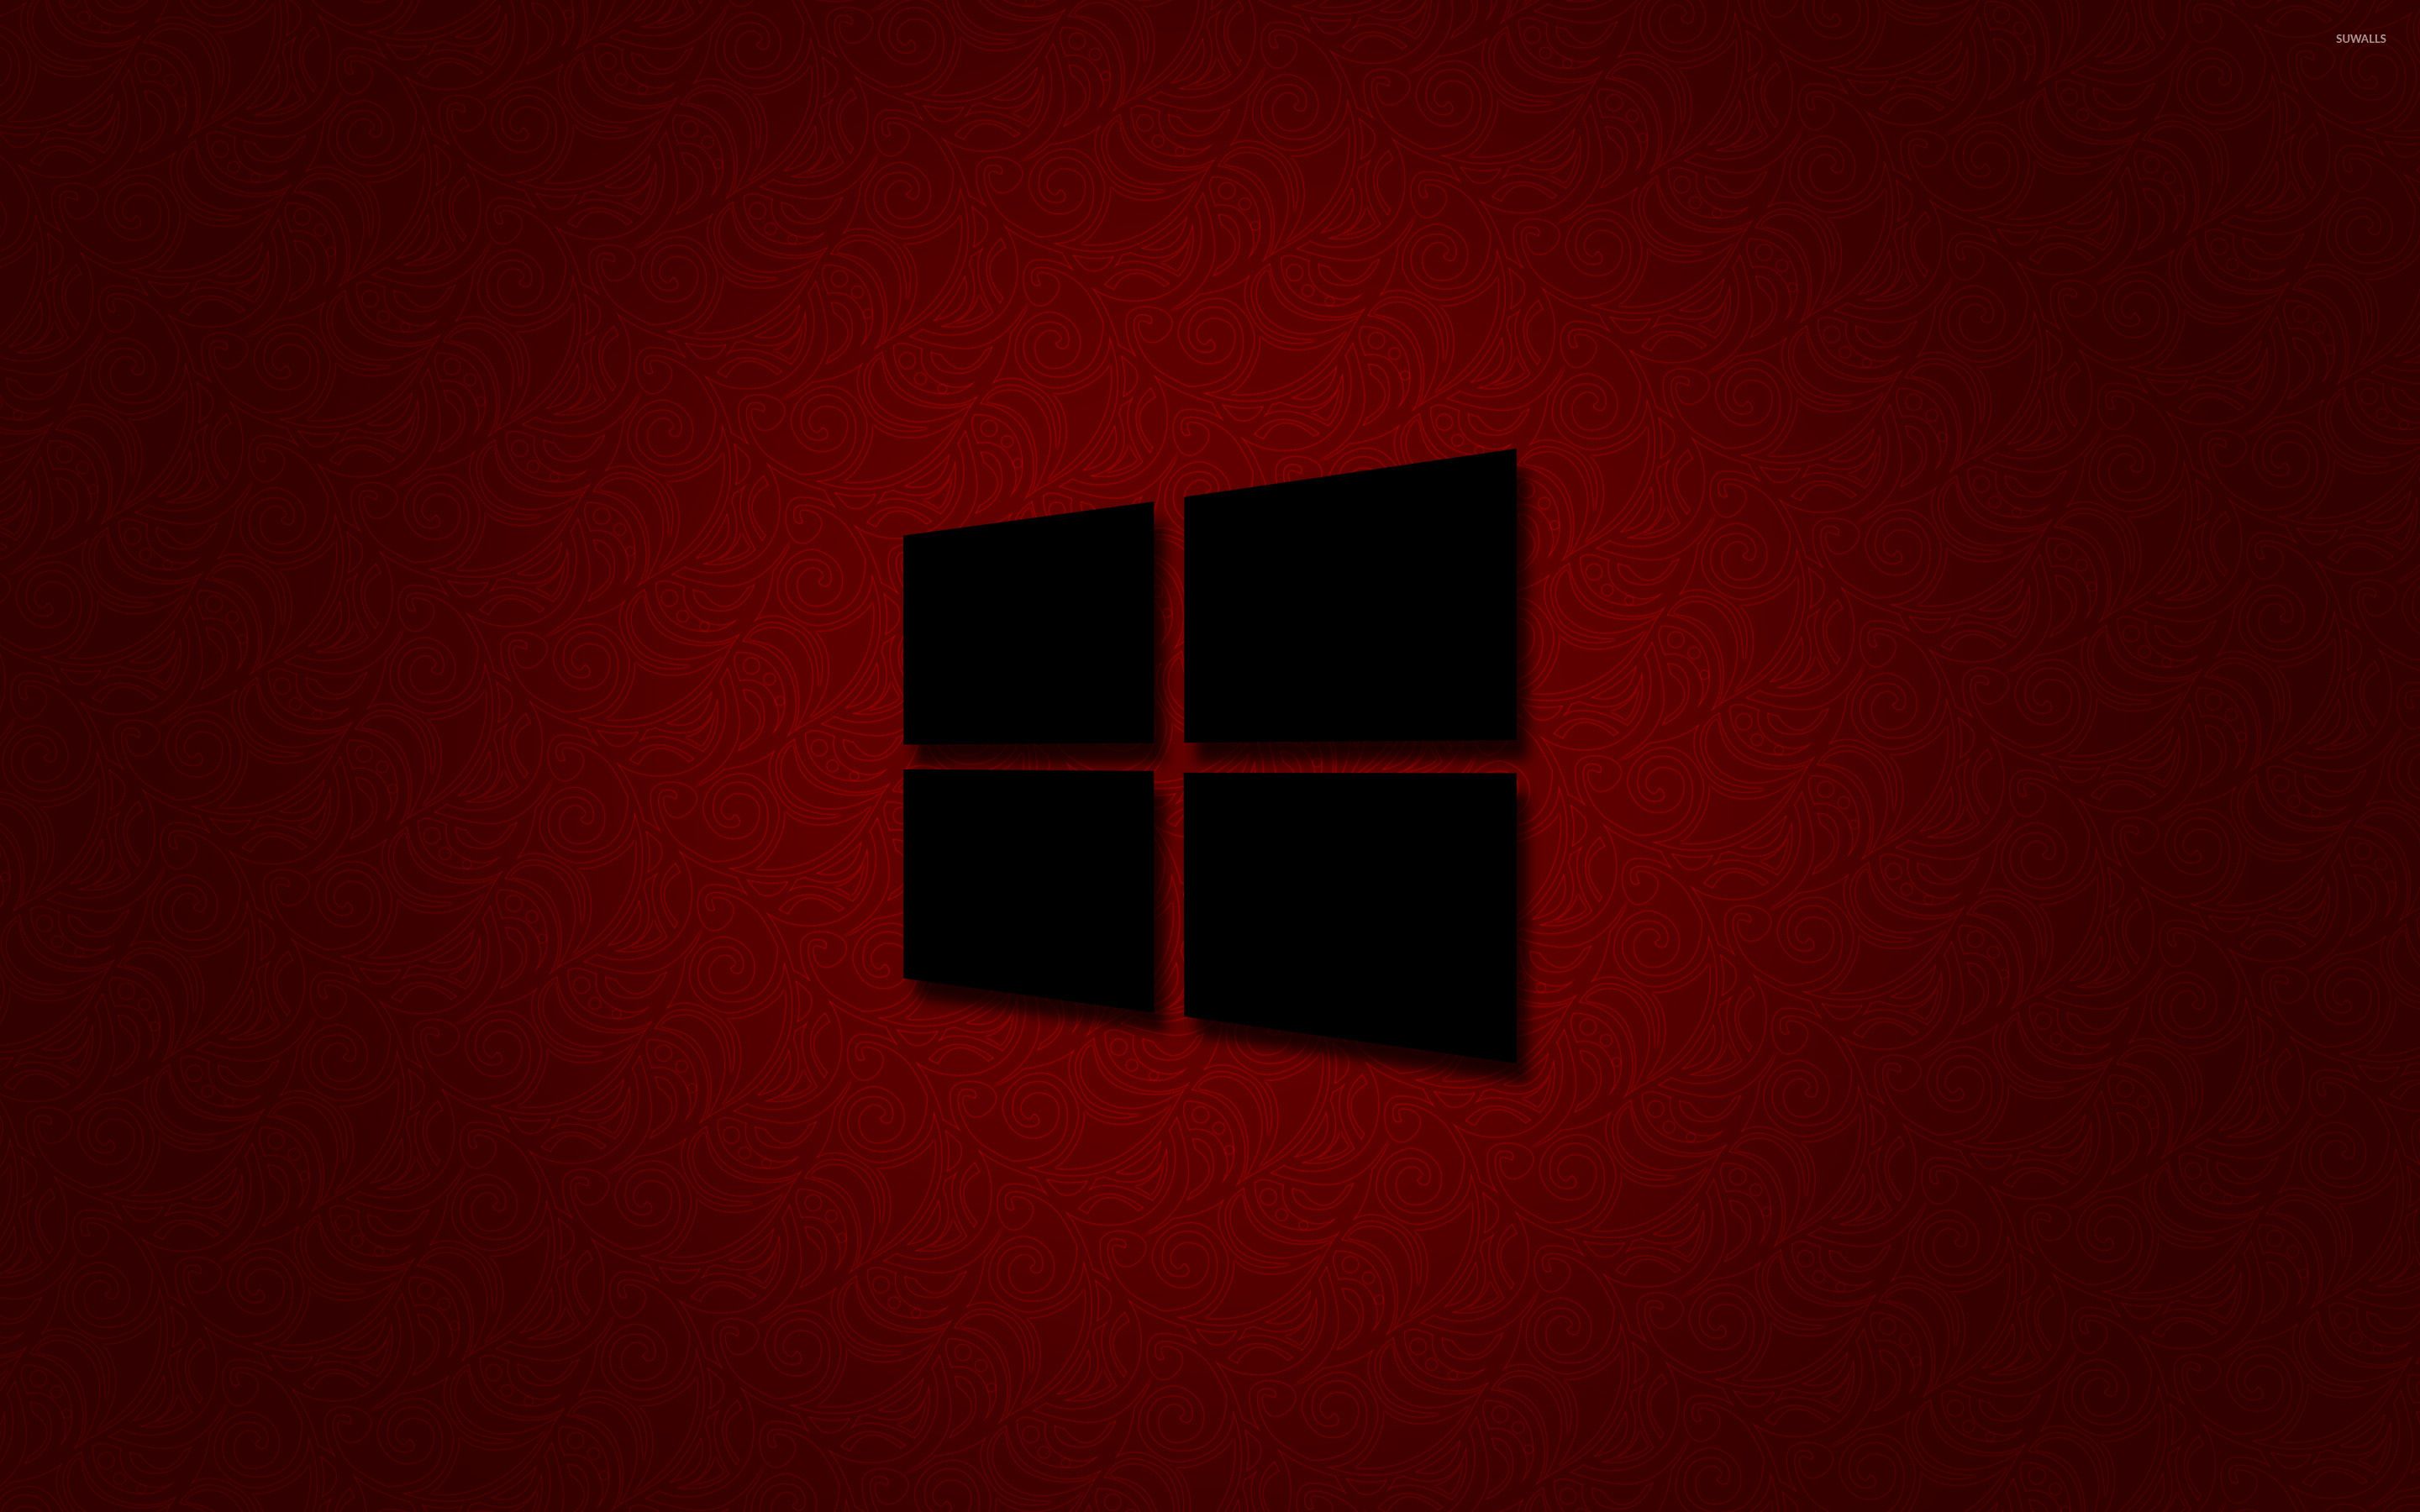 Logotipo de Windows 10 negro sobre fondo rojo - Fondos de pantalla de computadora - # 45695